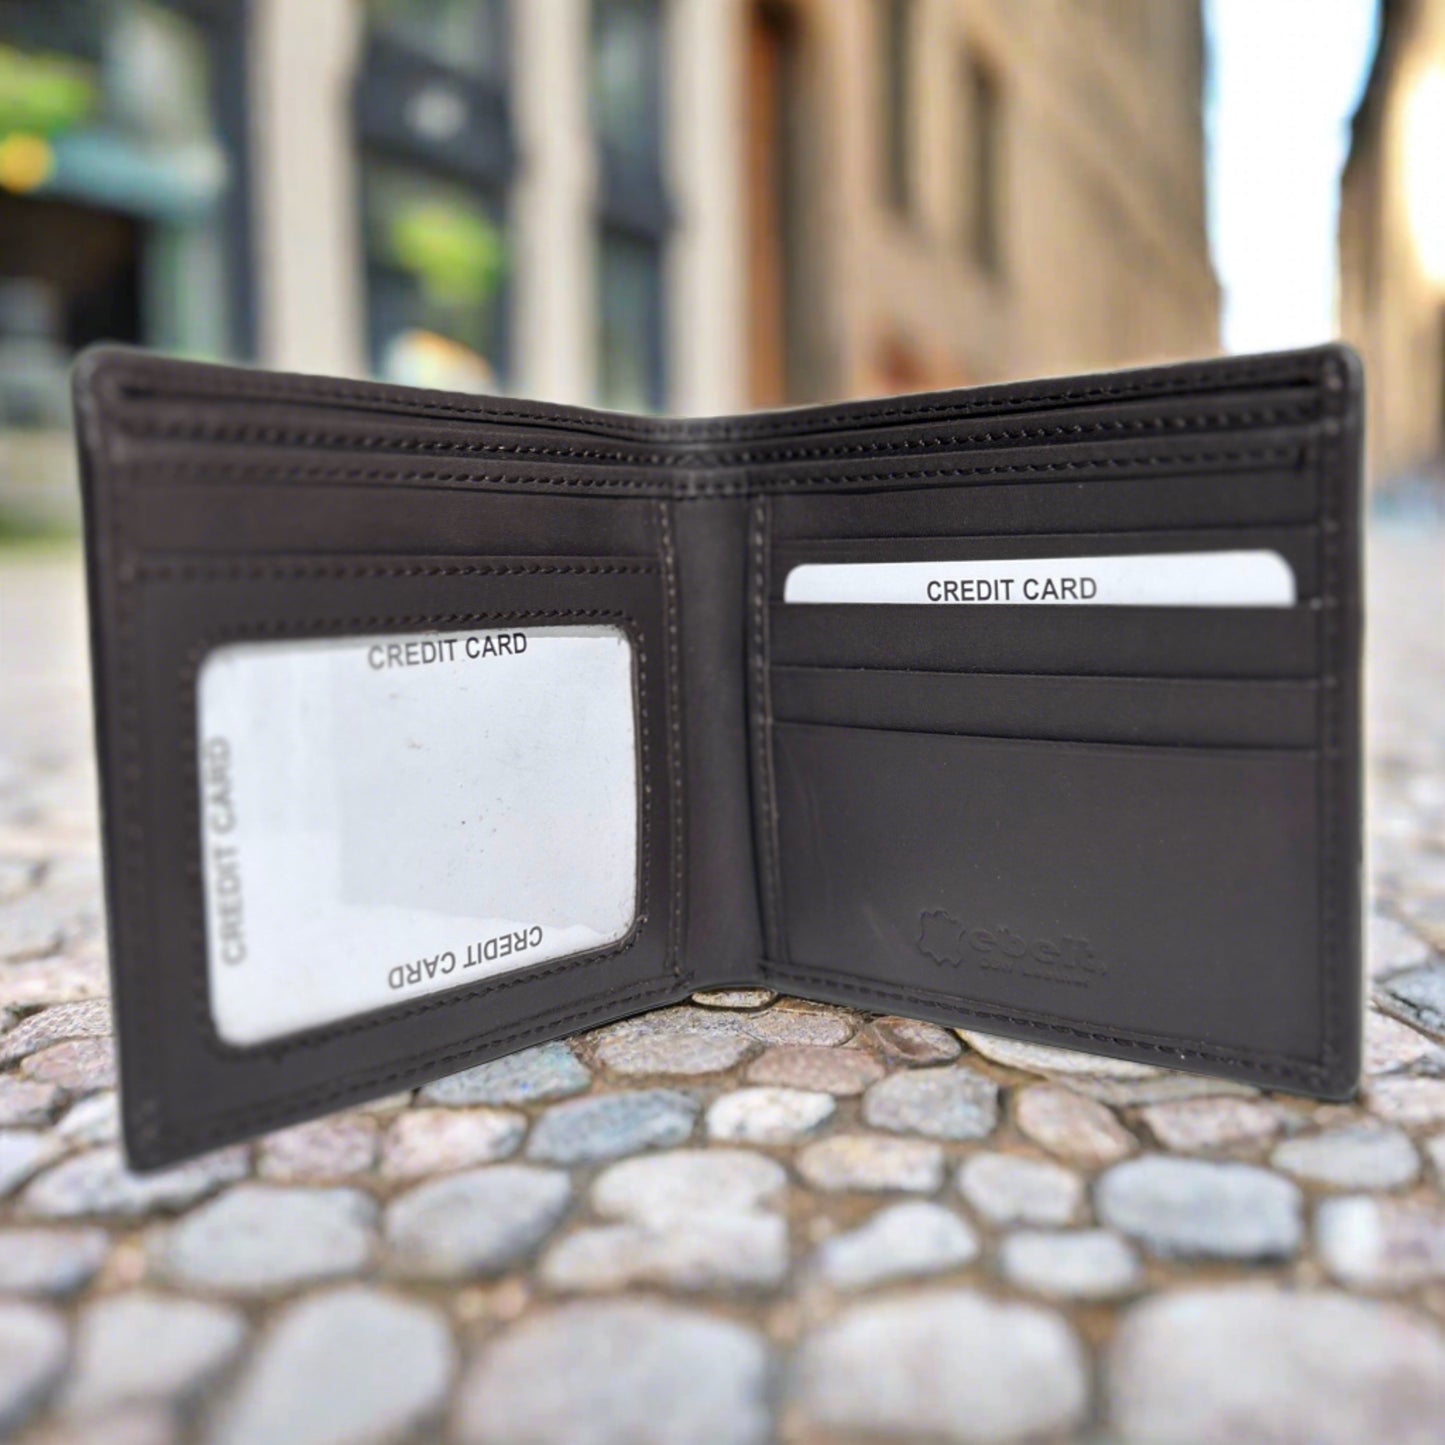 WM076X - Cow leather wallet 印度製頭層牛皮銀包